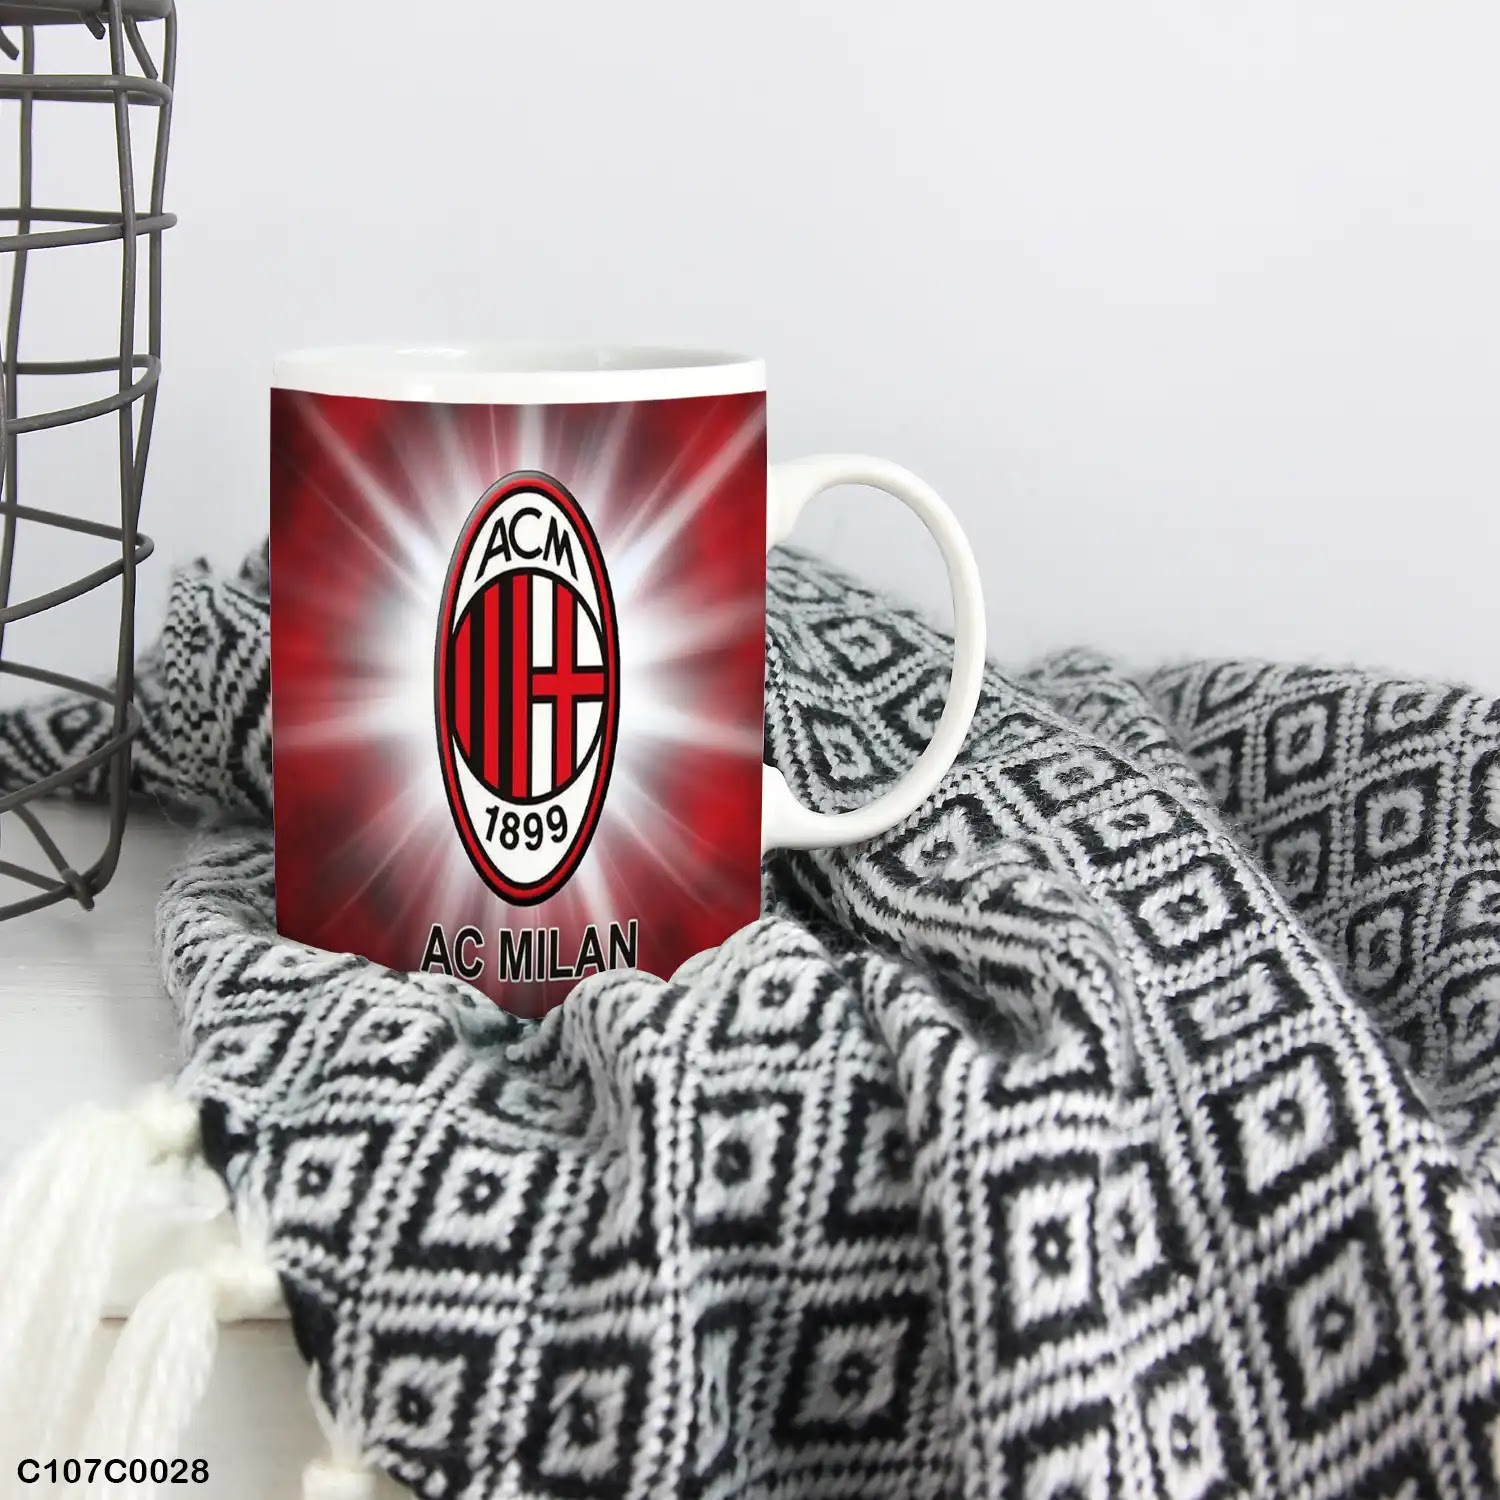 A mug (cup) printed with an image of a Milan logo